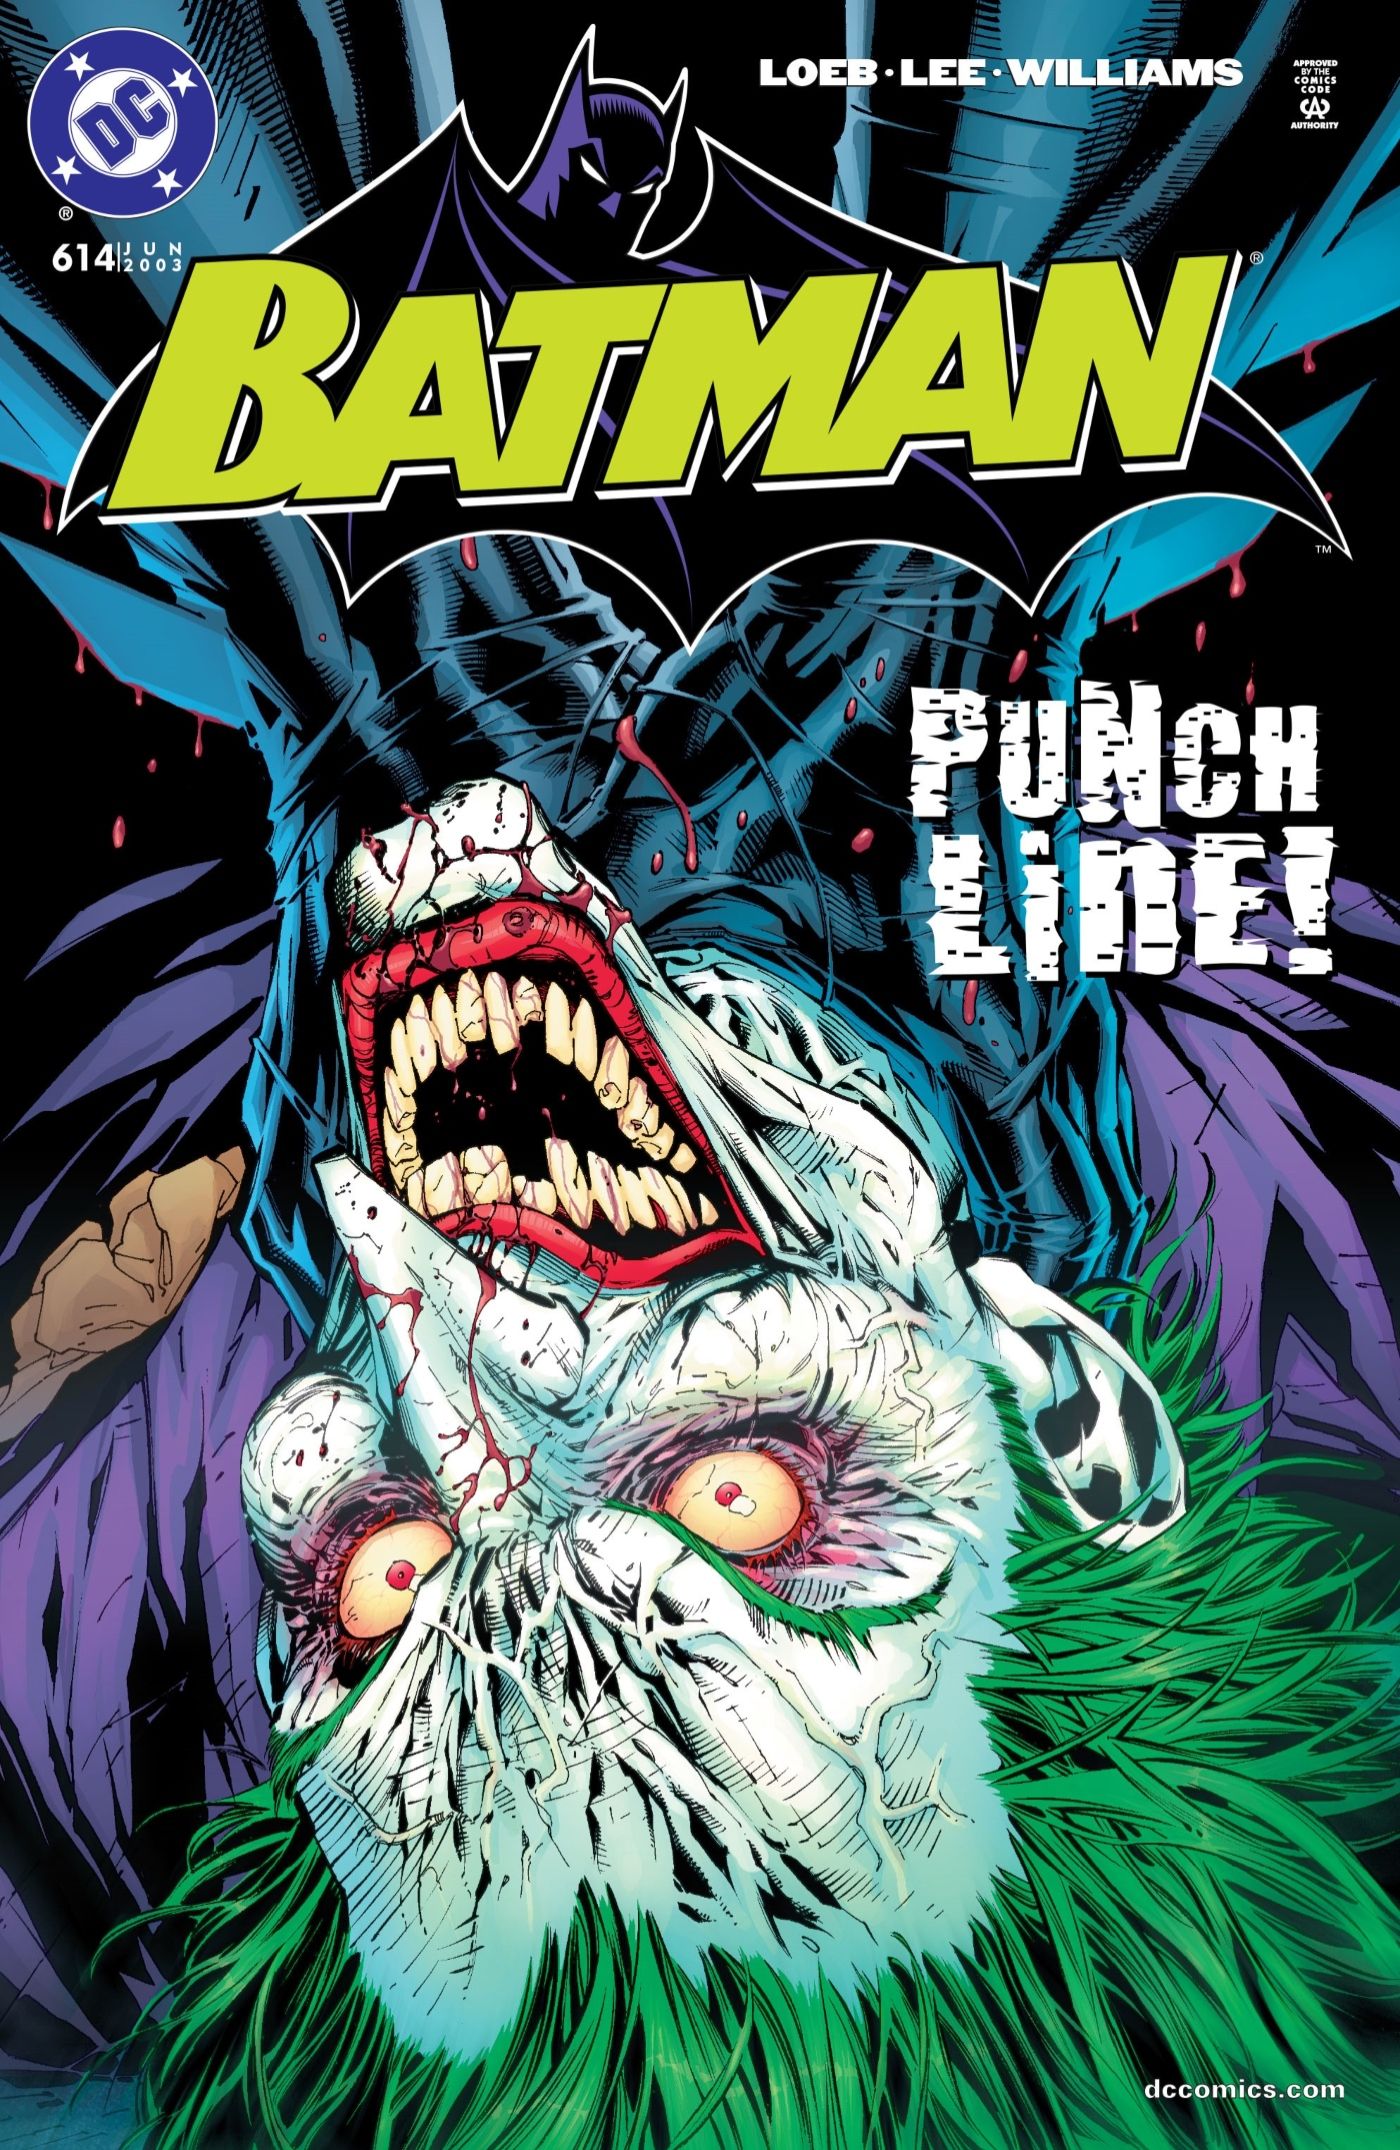 Batman strangling the Joker on a comic cover.